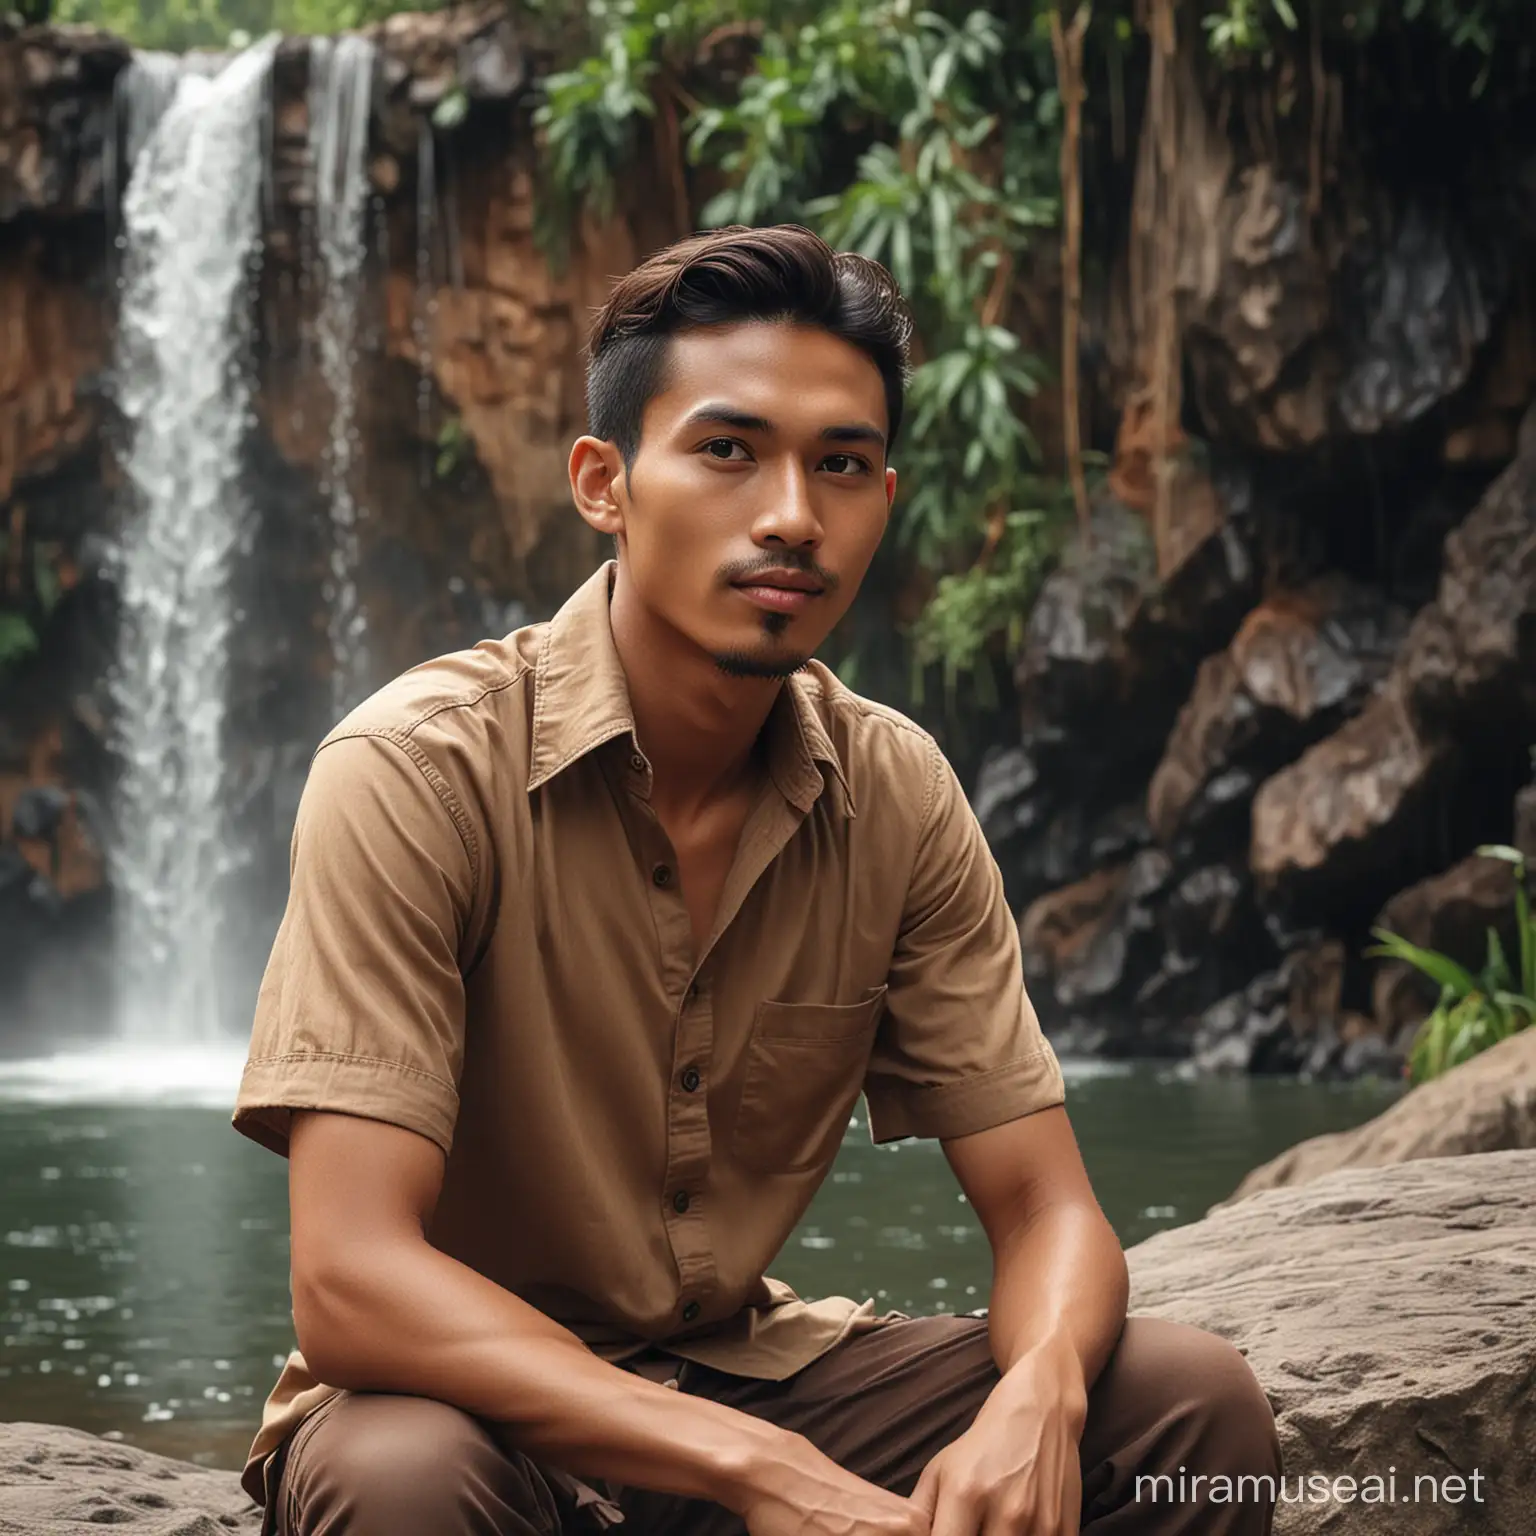 seorang laki laki usia 25 tahun wajah asli jawa indonesia , duduk di atas batu ,memakai kaos warna coklat ,Baiground air terjun . Kwalitas gambar super hd ,sangat terlihat relistis.